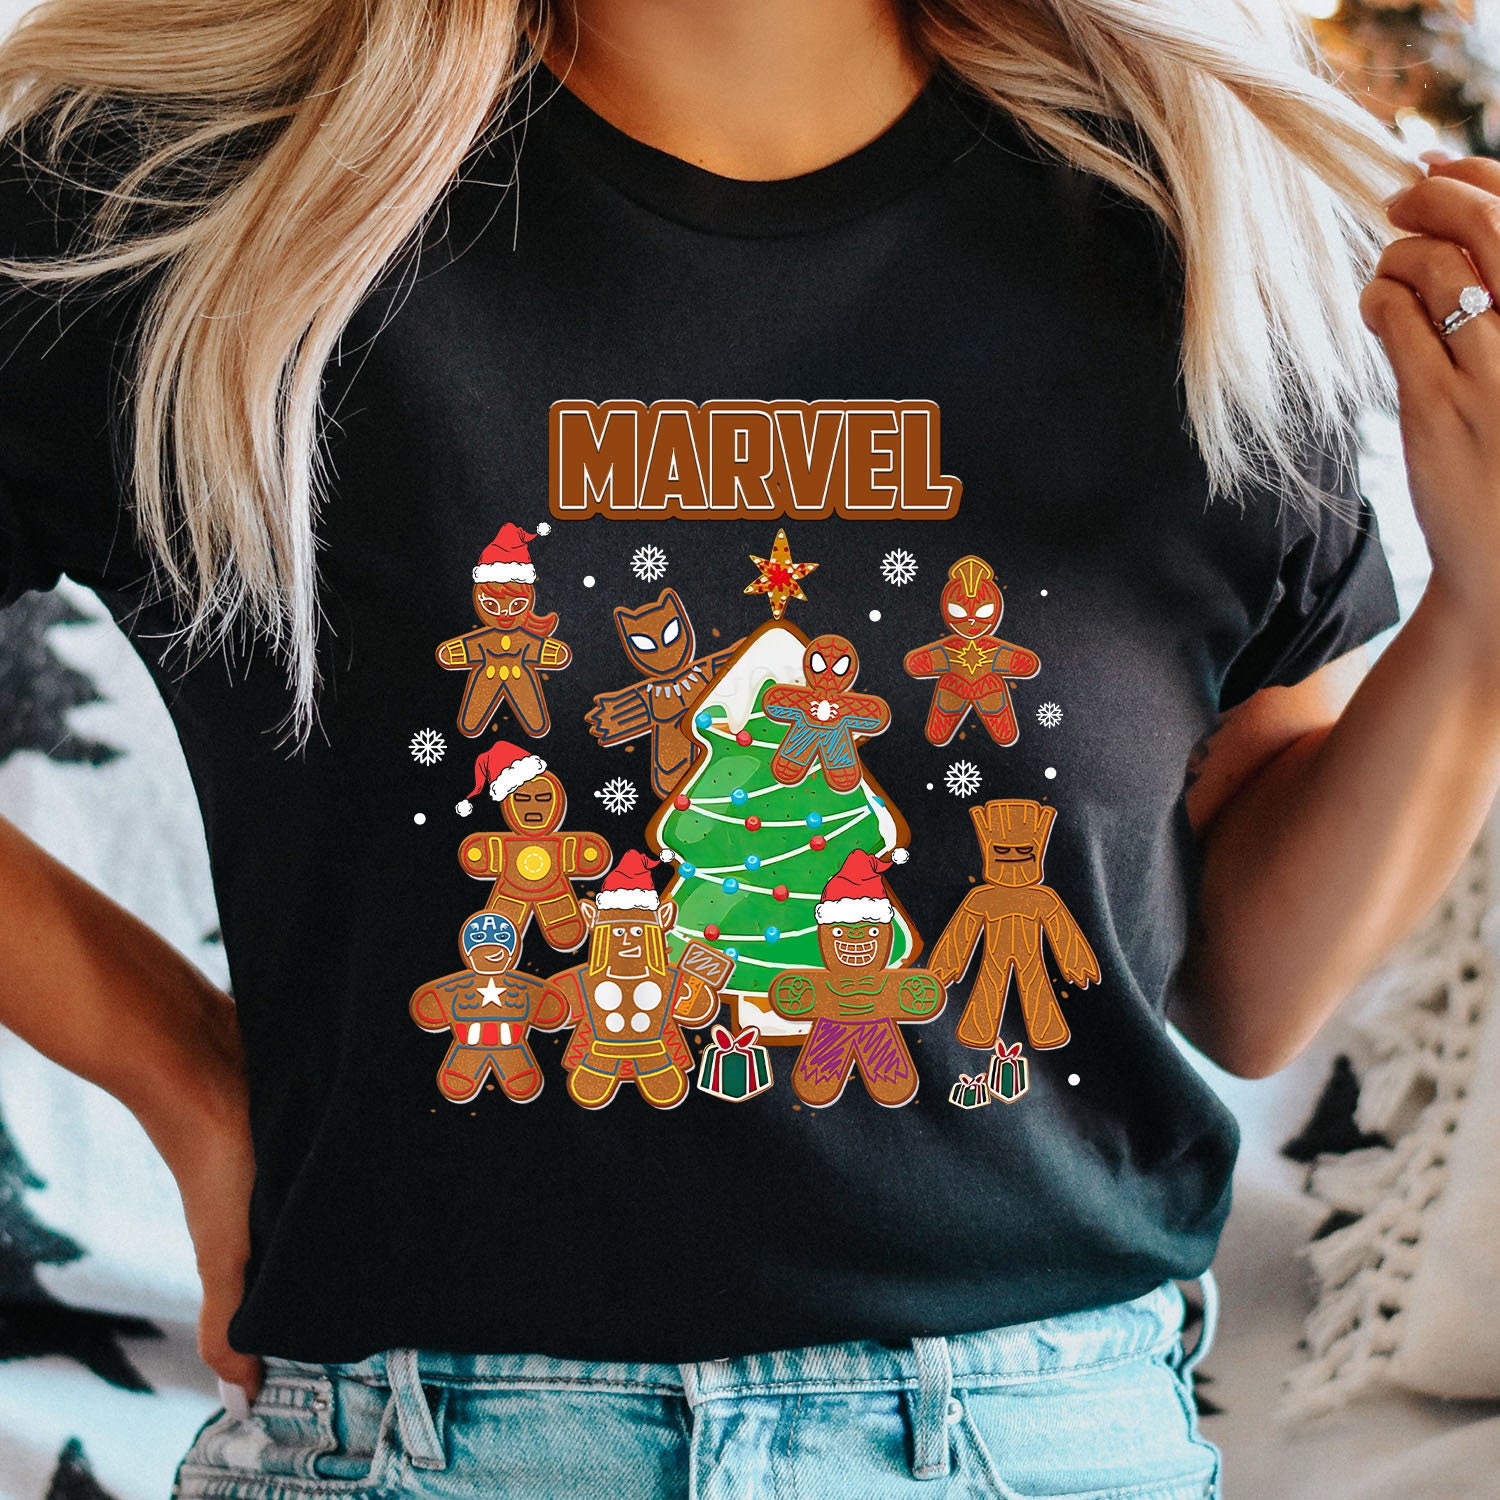 Discover Marvel Gingerbread Christmas Shirt, Avengers Christmas Shirt